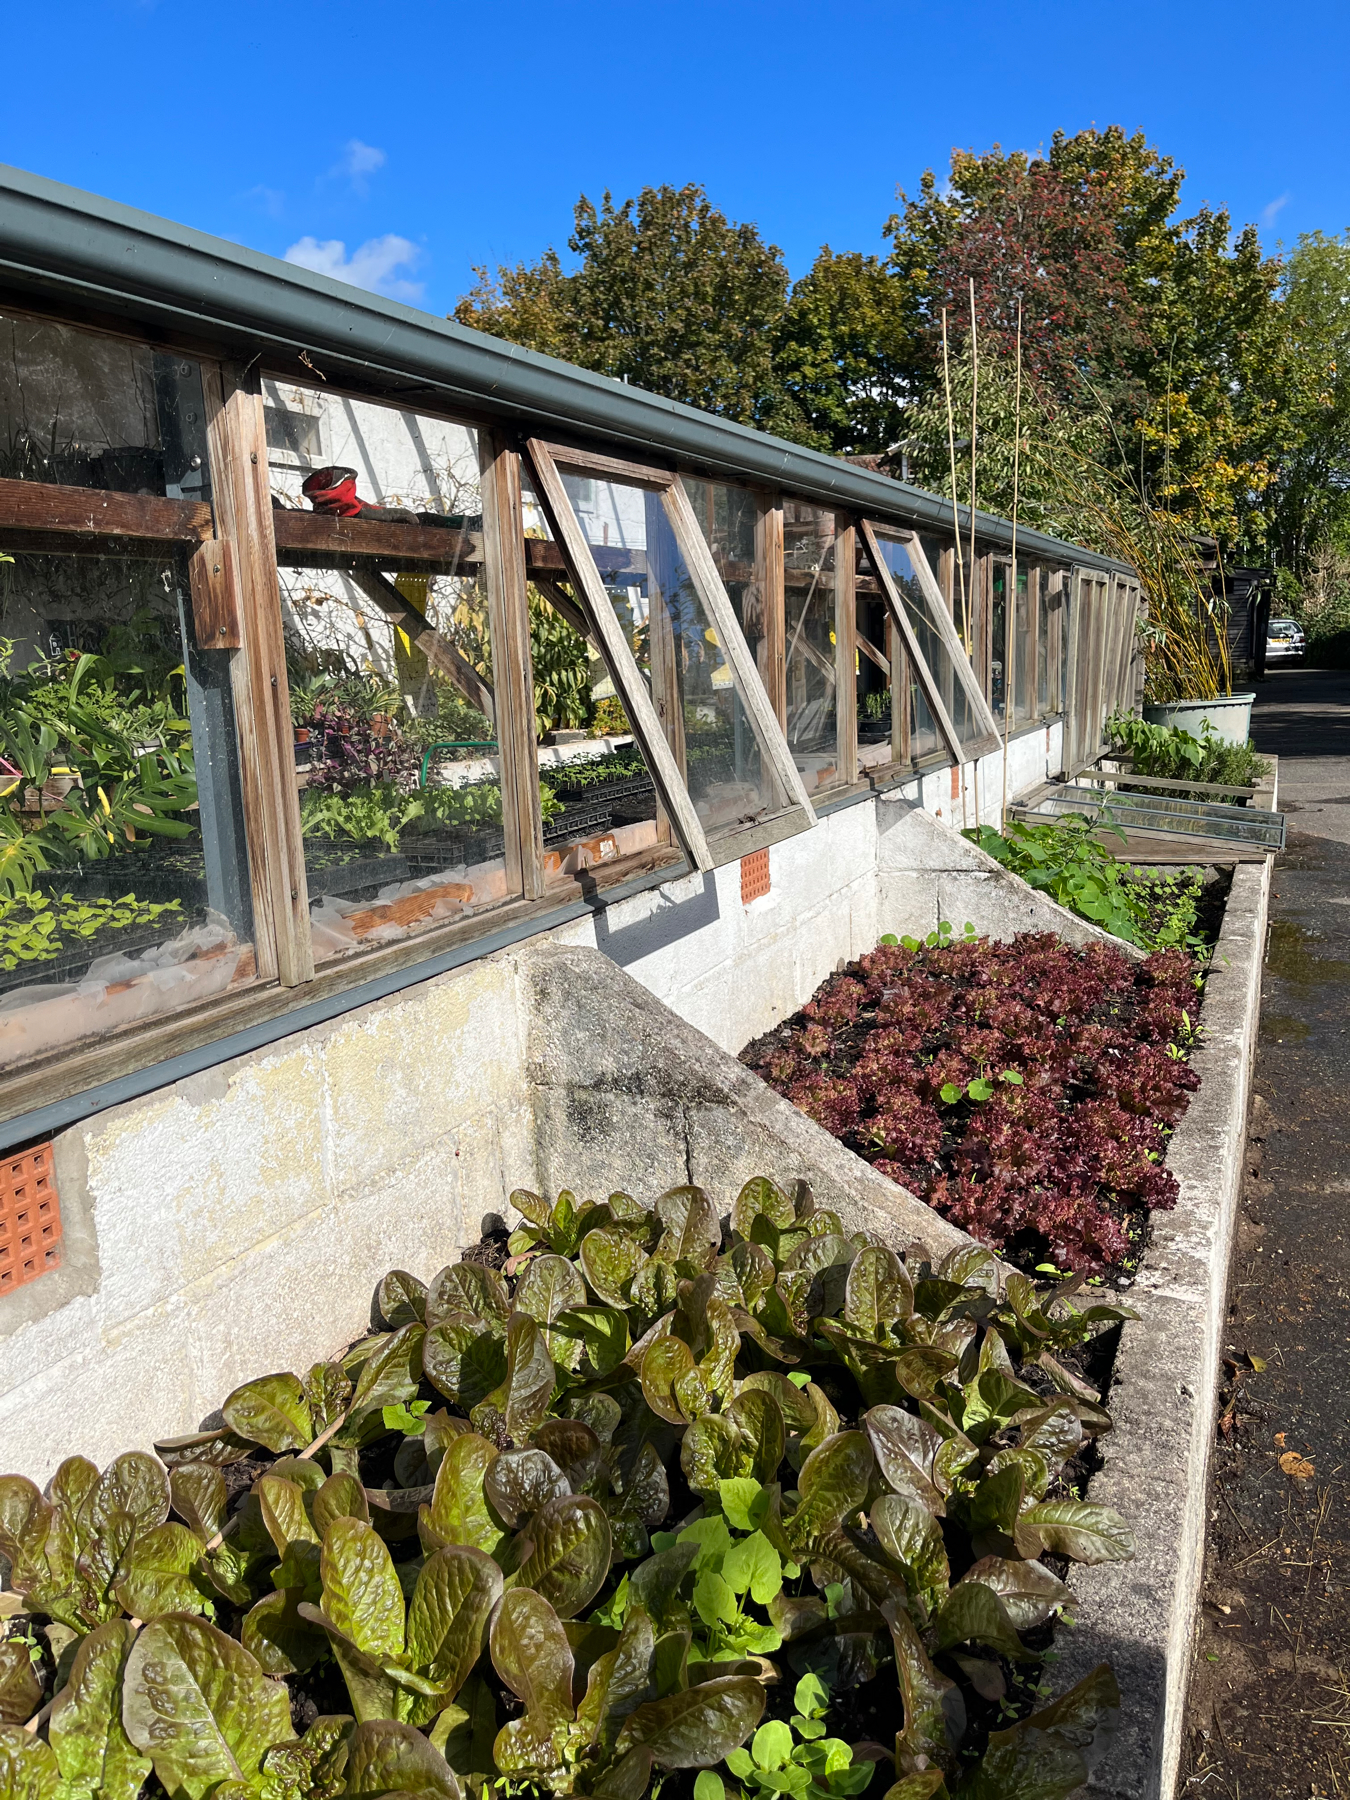 Lettuces at Windmill Hill City Farm